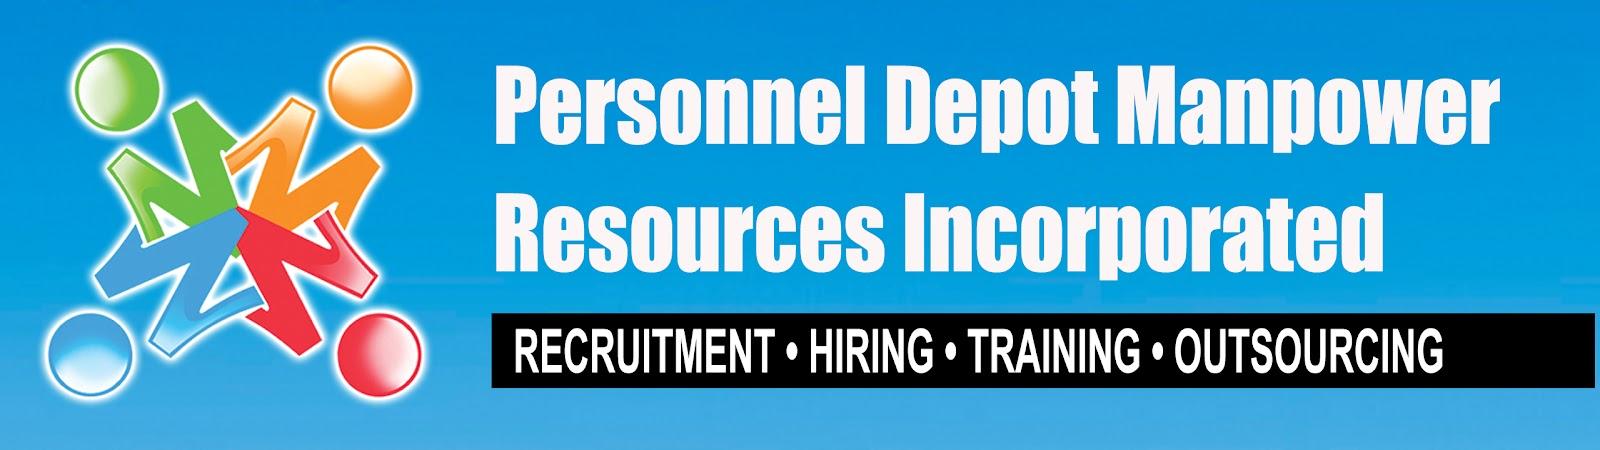 Personnel Depot Manpower Resources Inc